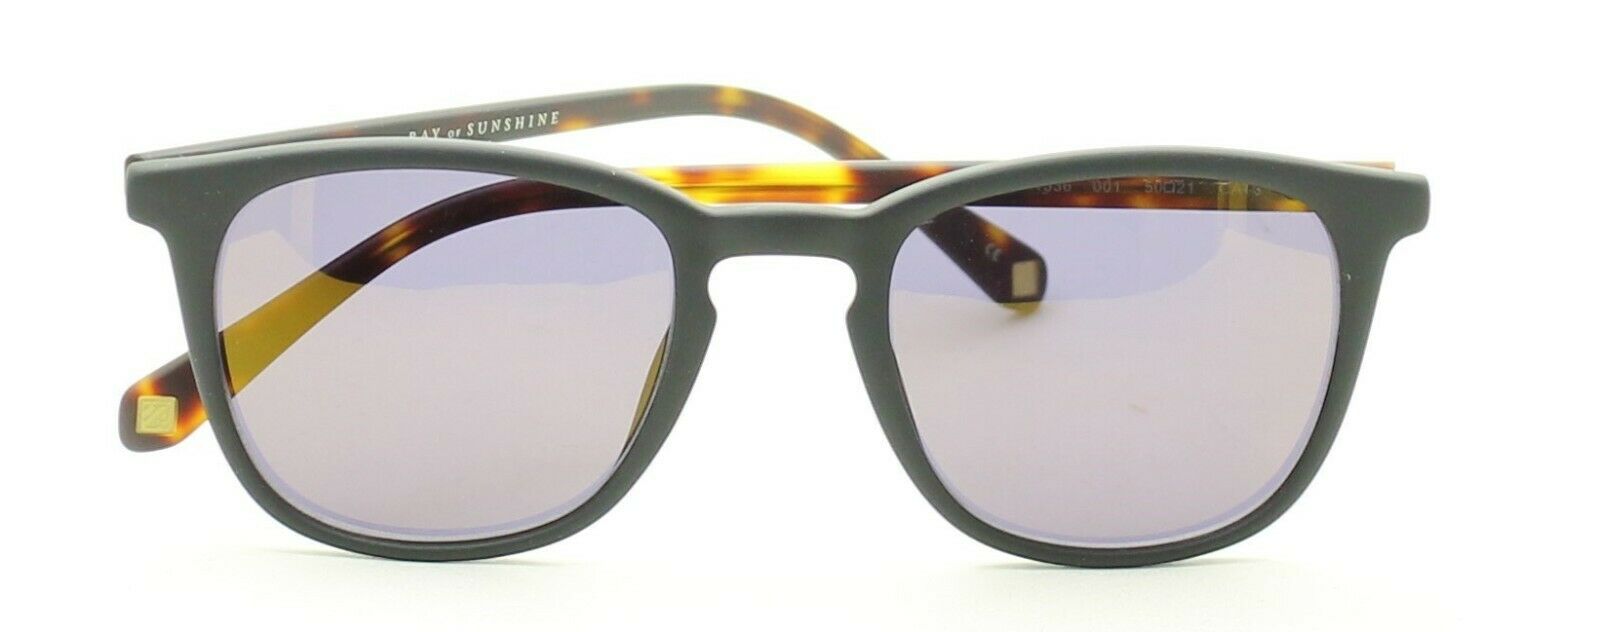 TED BAKER Riggs 1536 001 Cat 3 50mm Sunglasses Shades Glasses Eyewear Frames-New